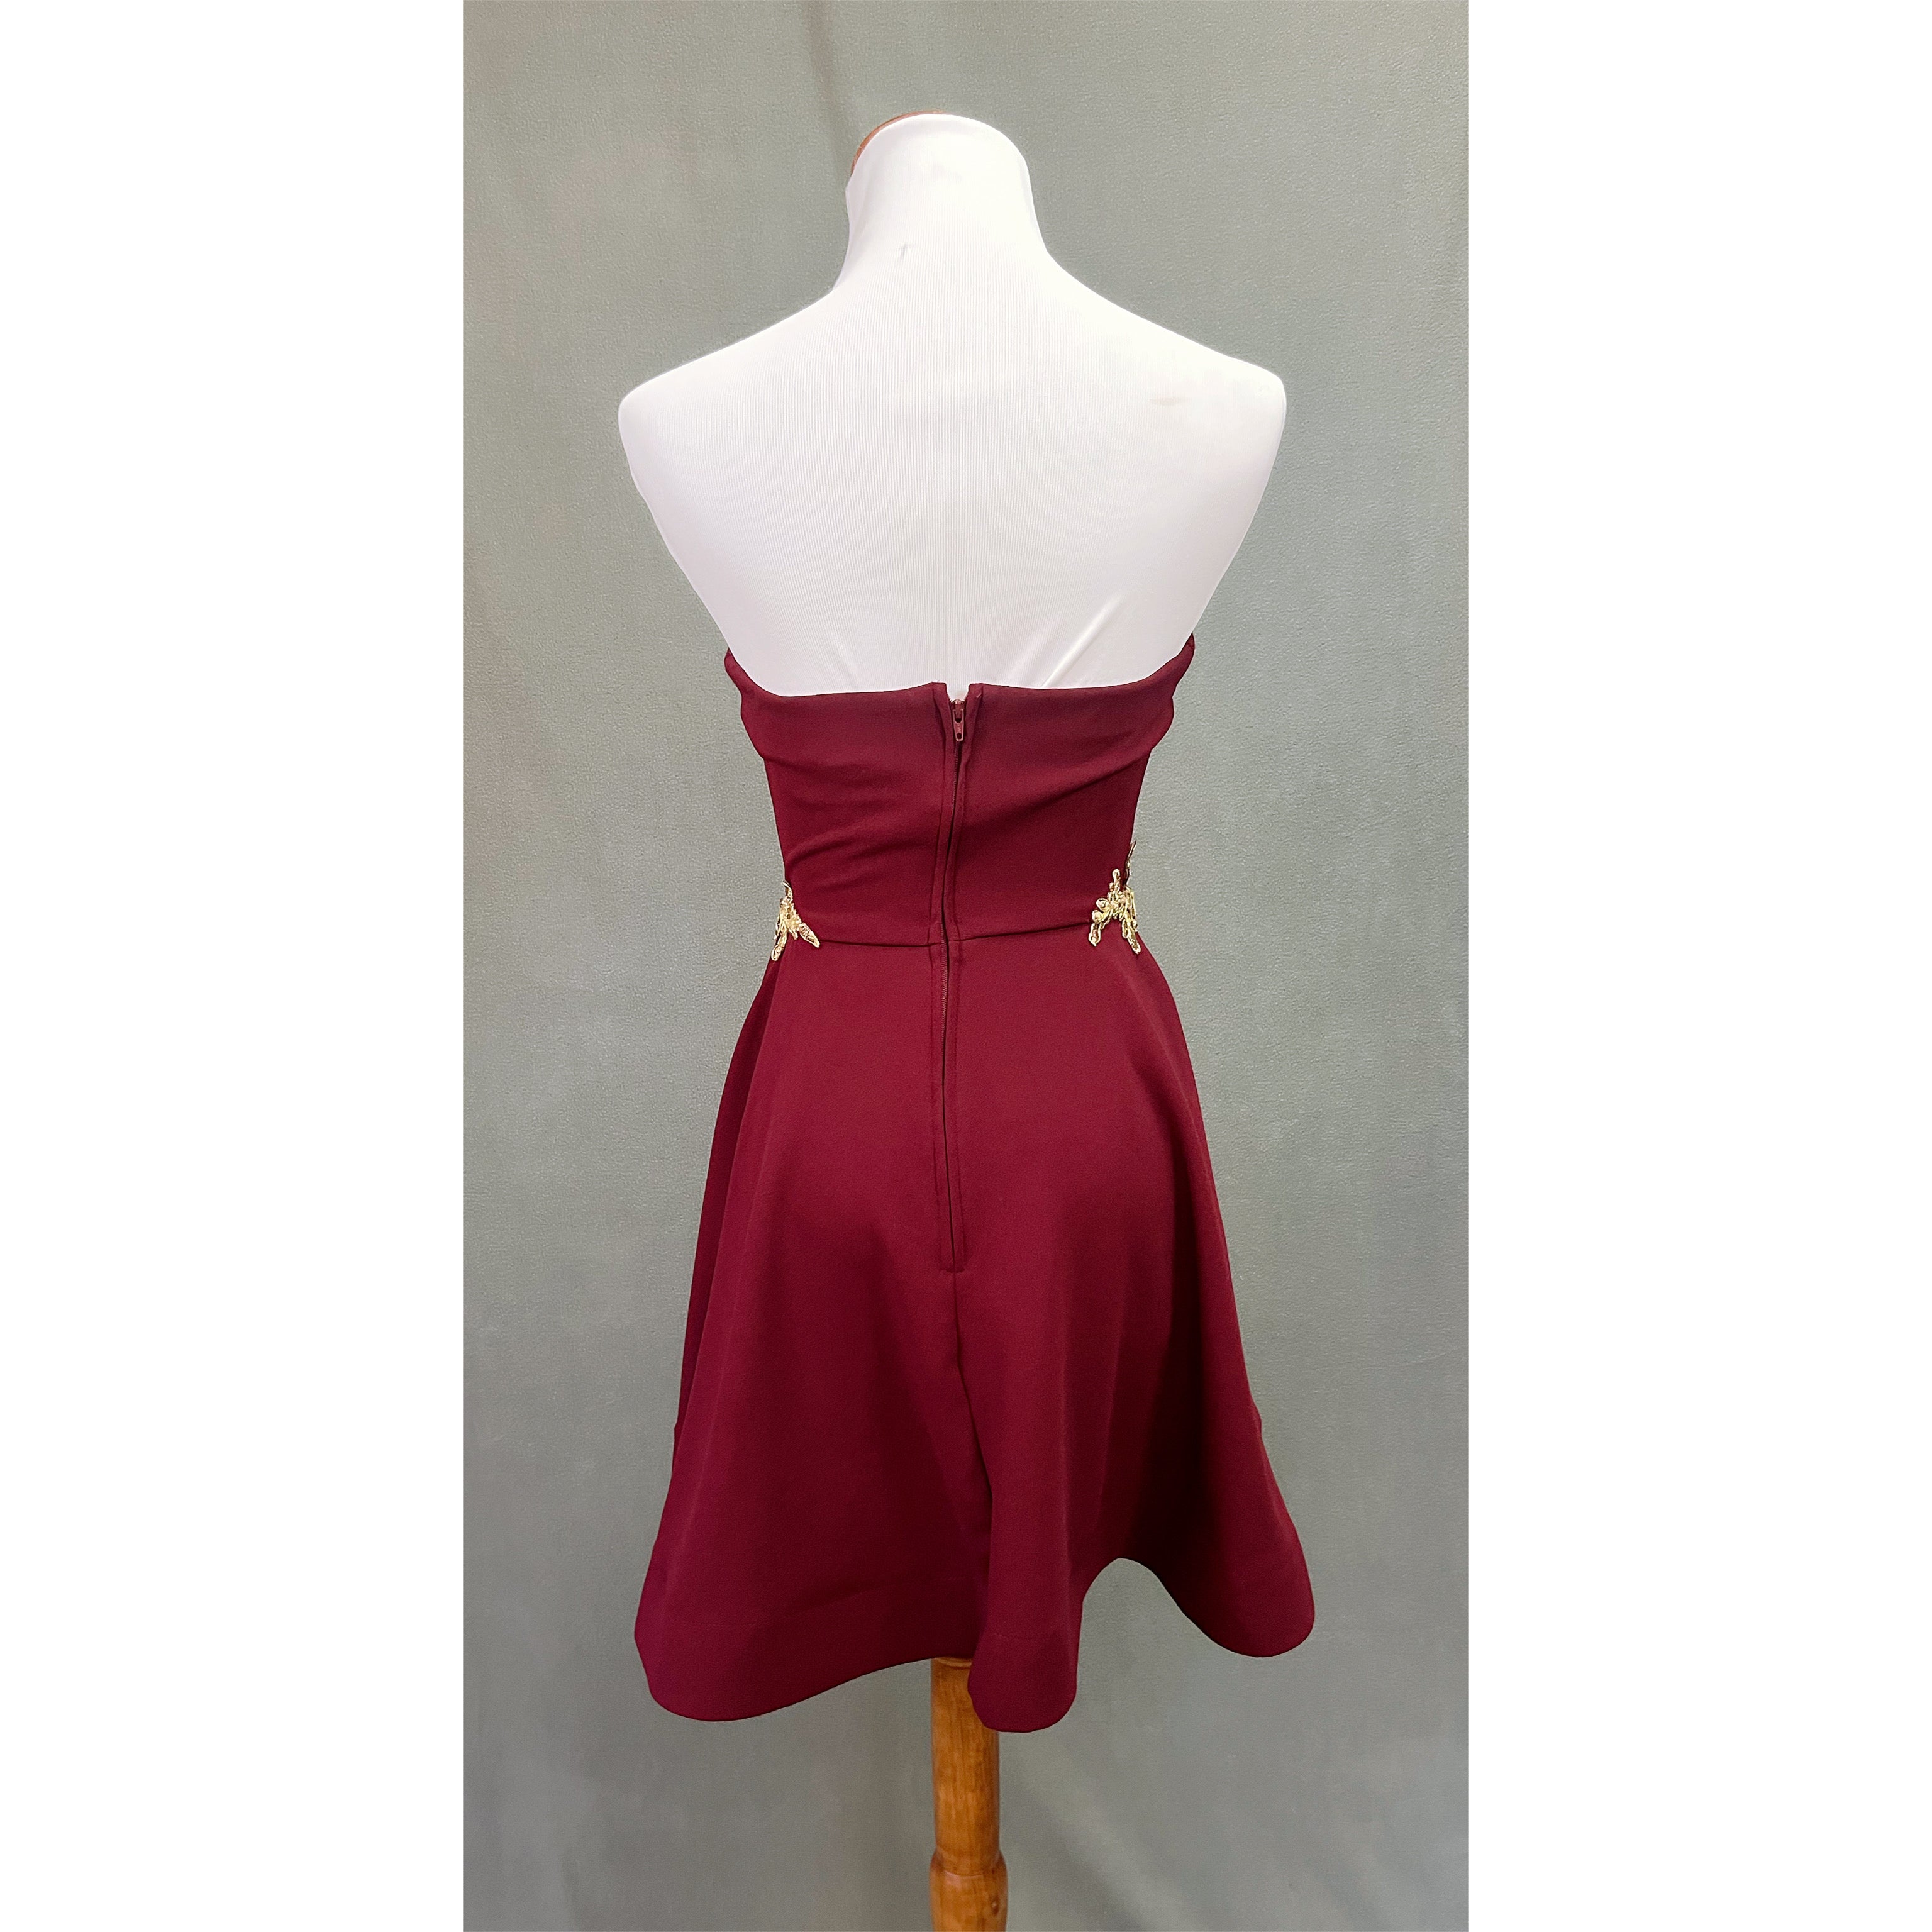 B. Darlin burgundy strapless dress, size 3/4